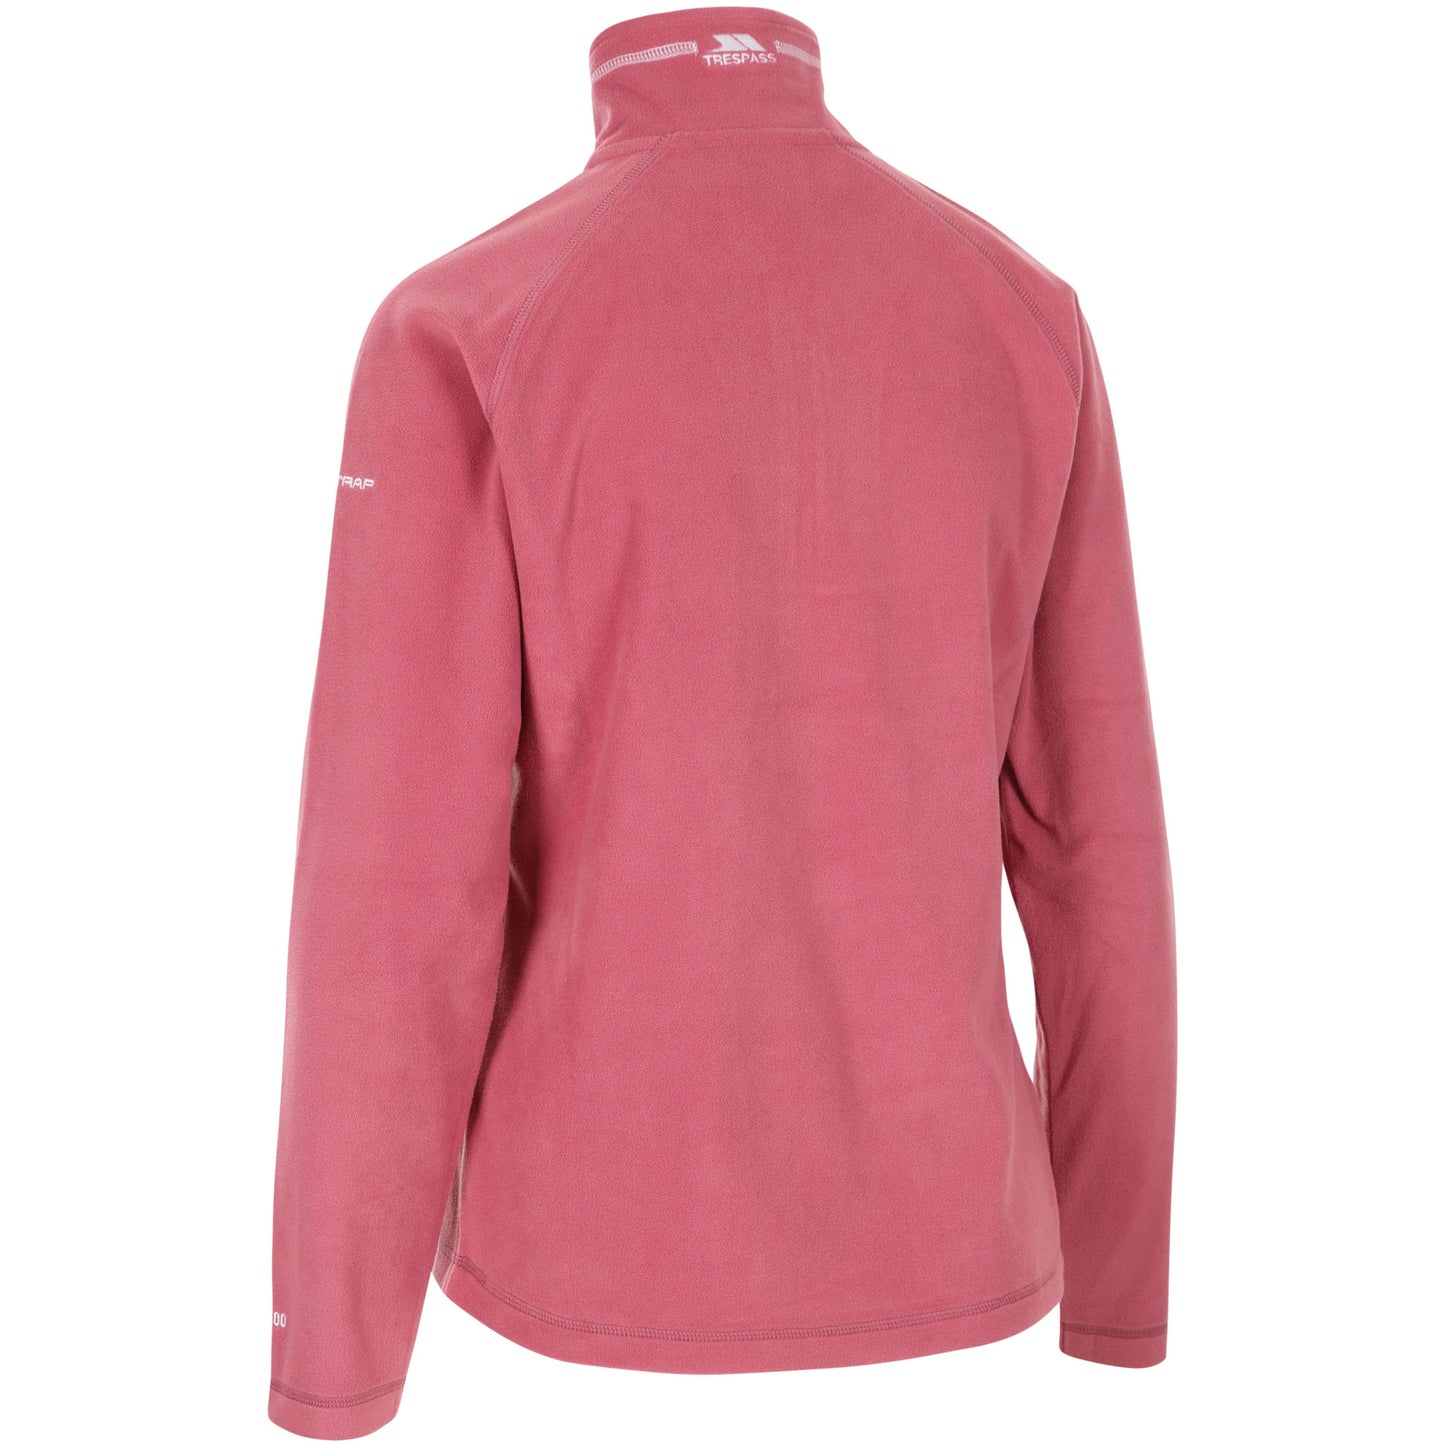 Skylar Women's Half Zip Fleece Top in Rose Blush